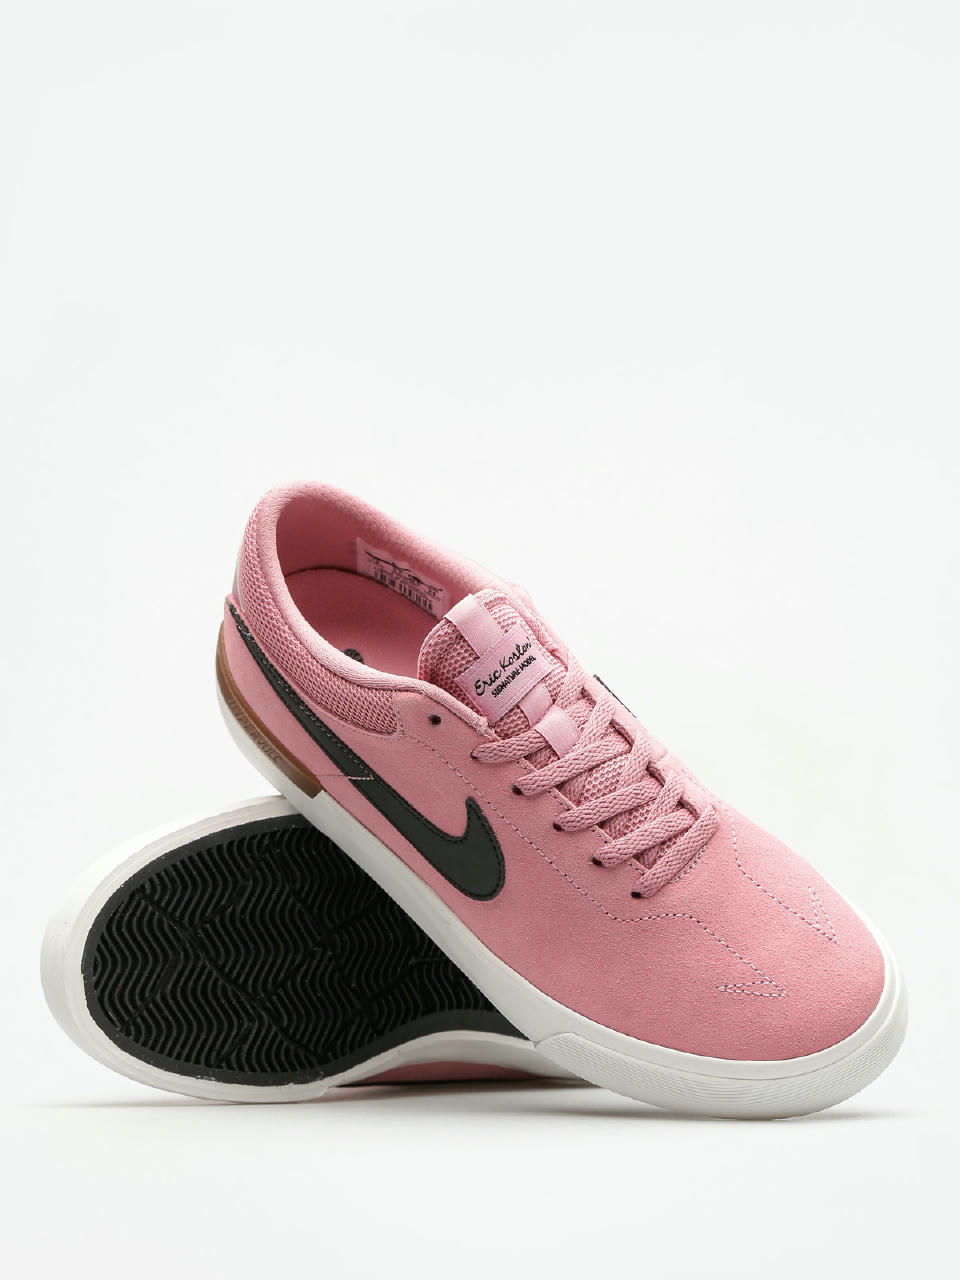 Nike SB Sb Hypervulc Eric pink/black gum med brown)